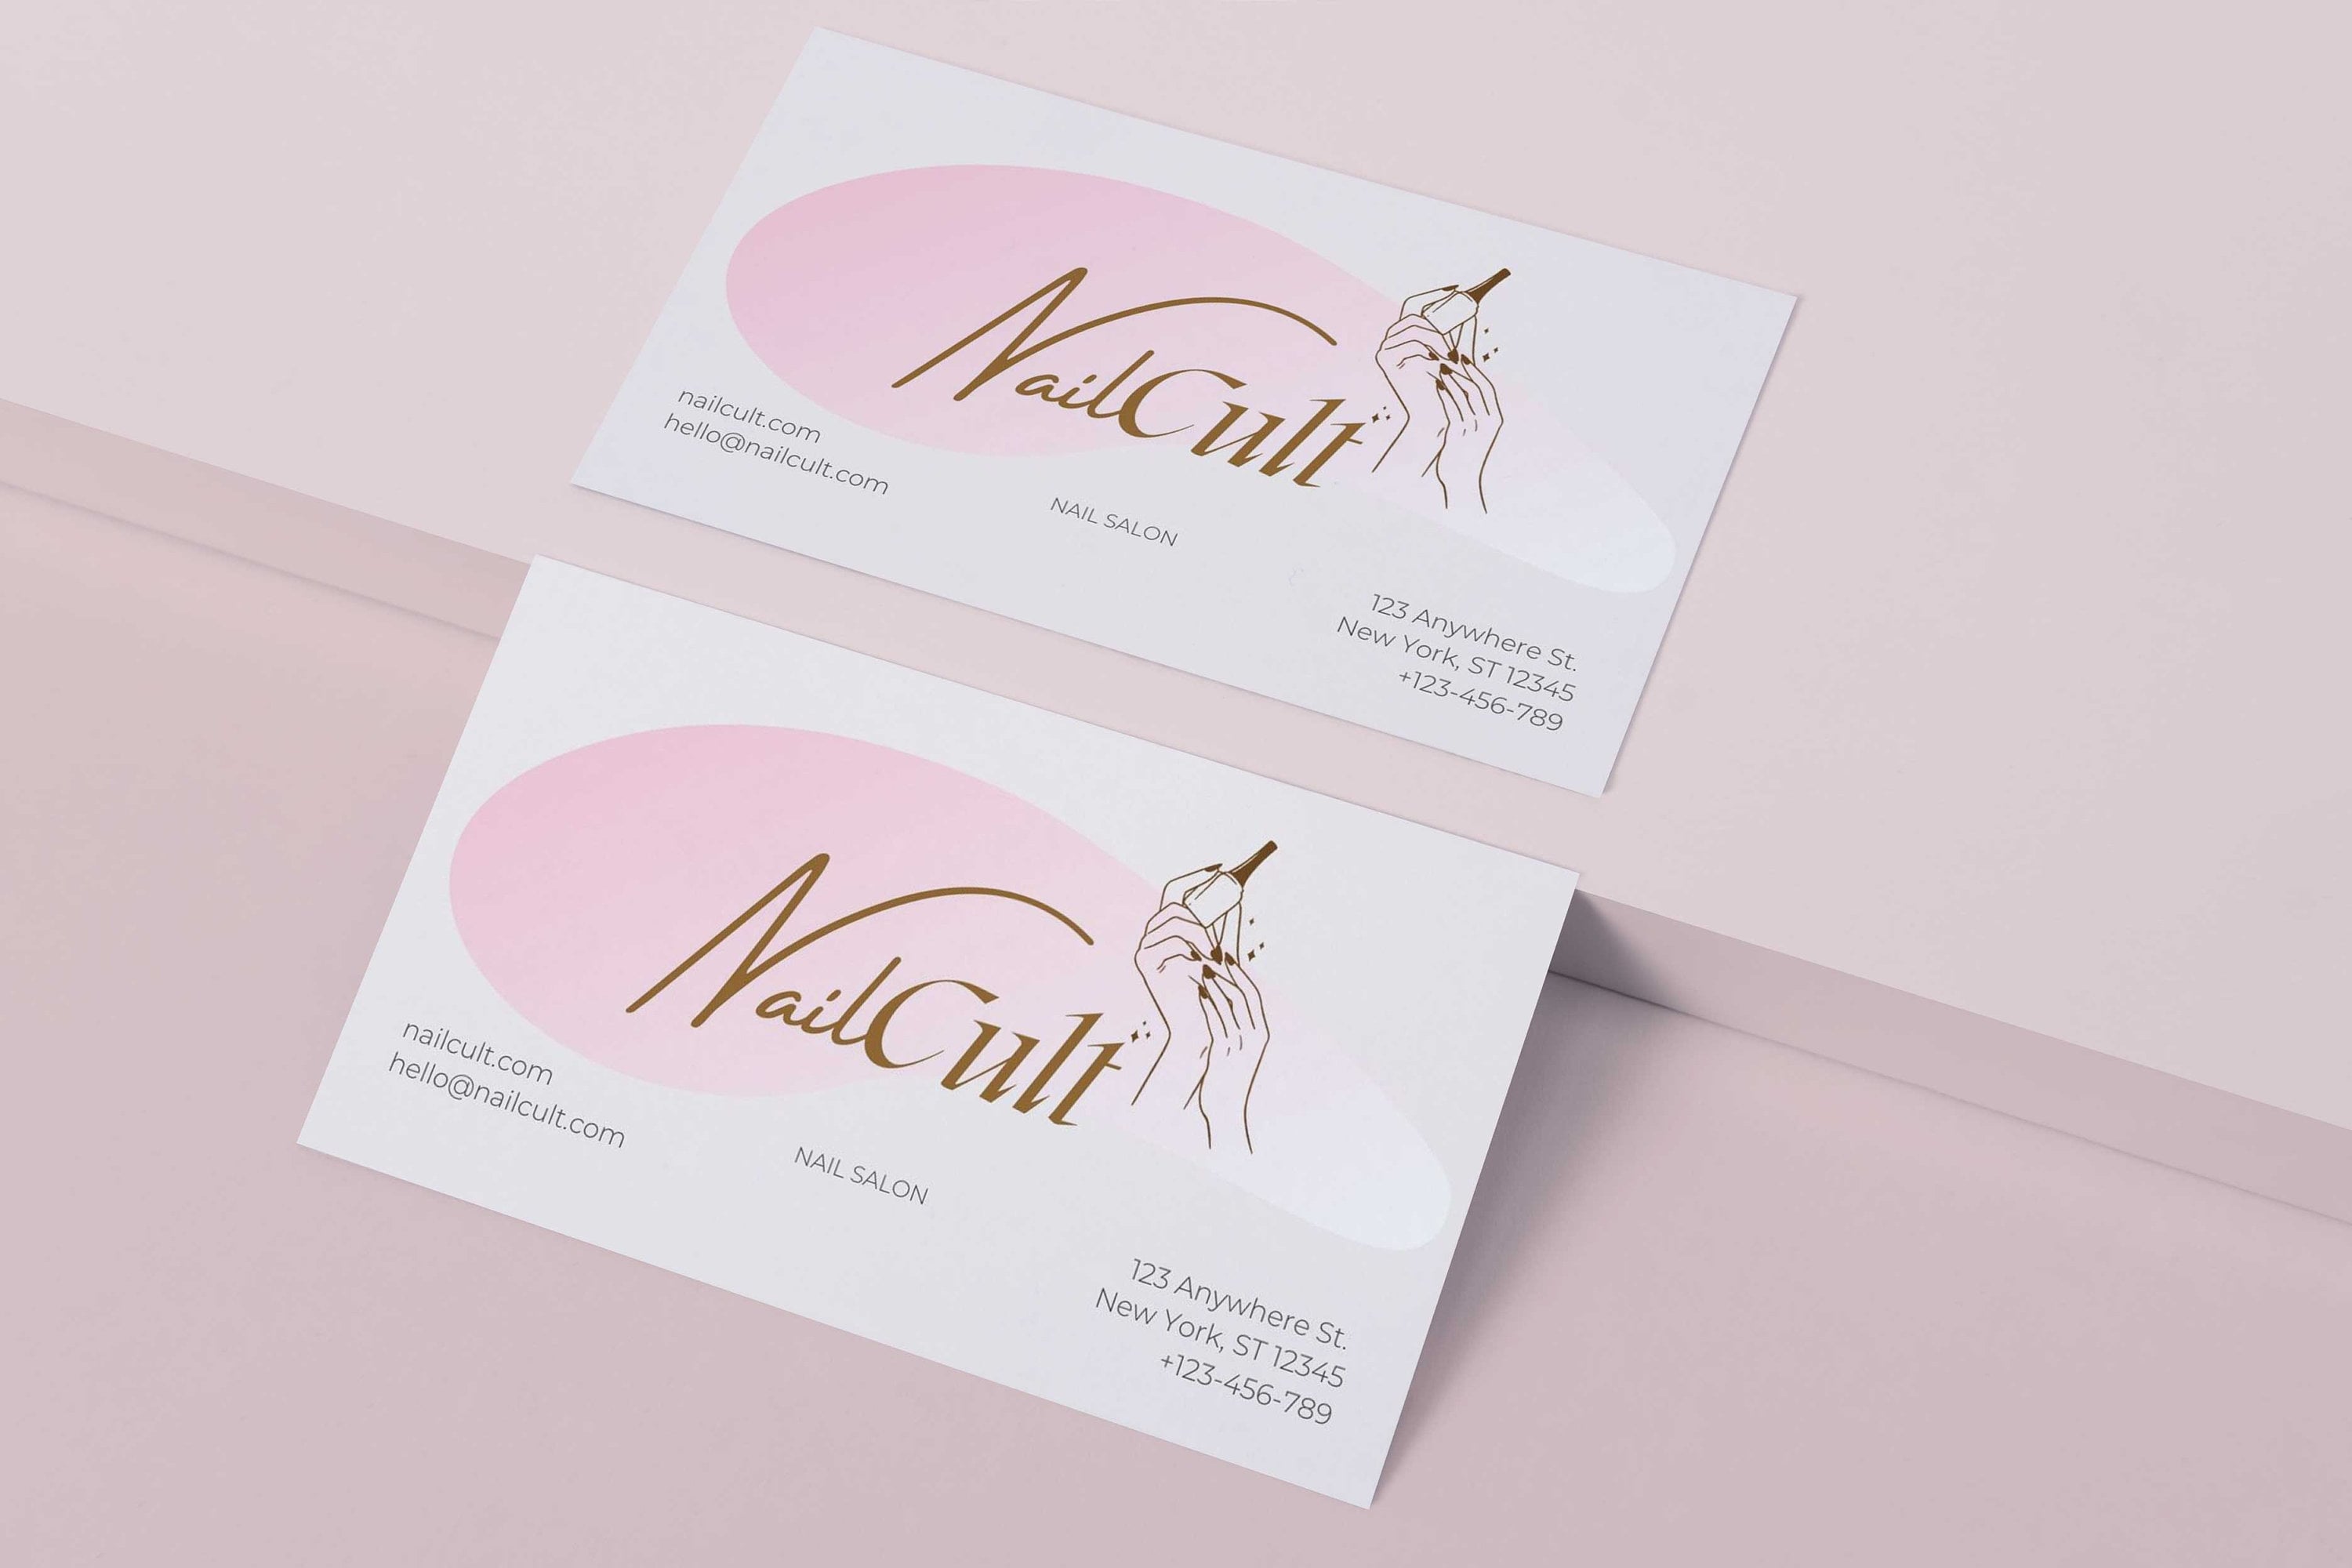 6. Nail Salon Business Card Templates - wide 3